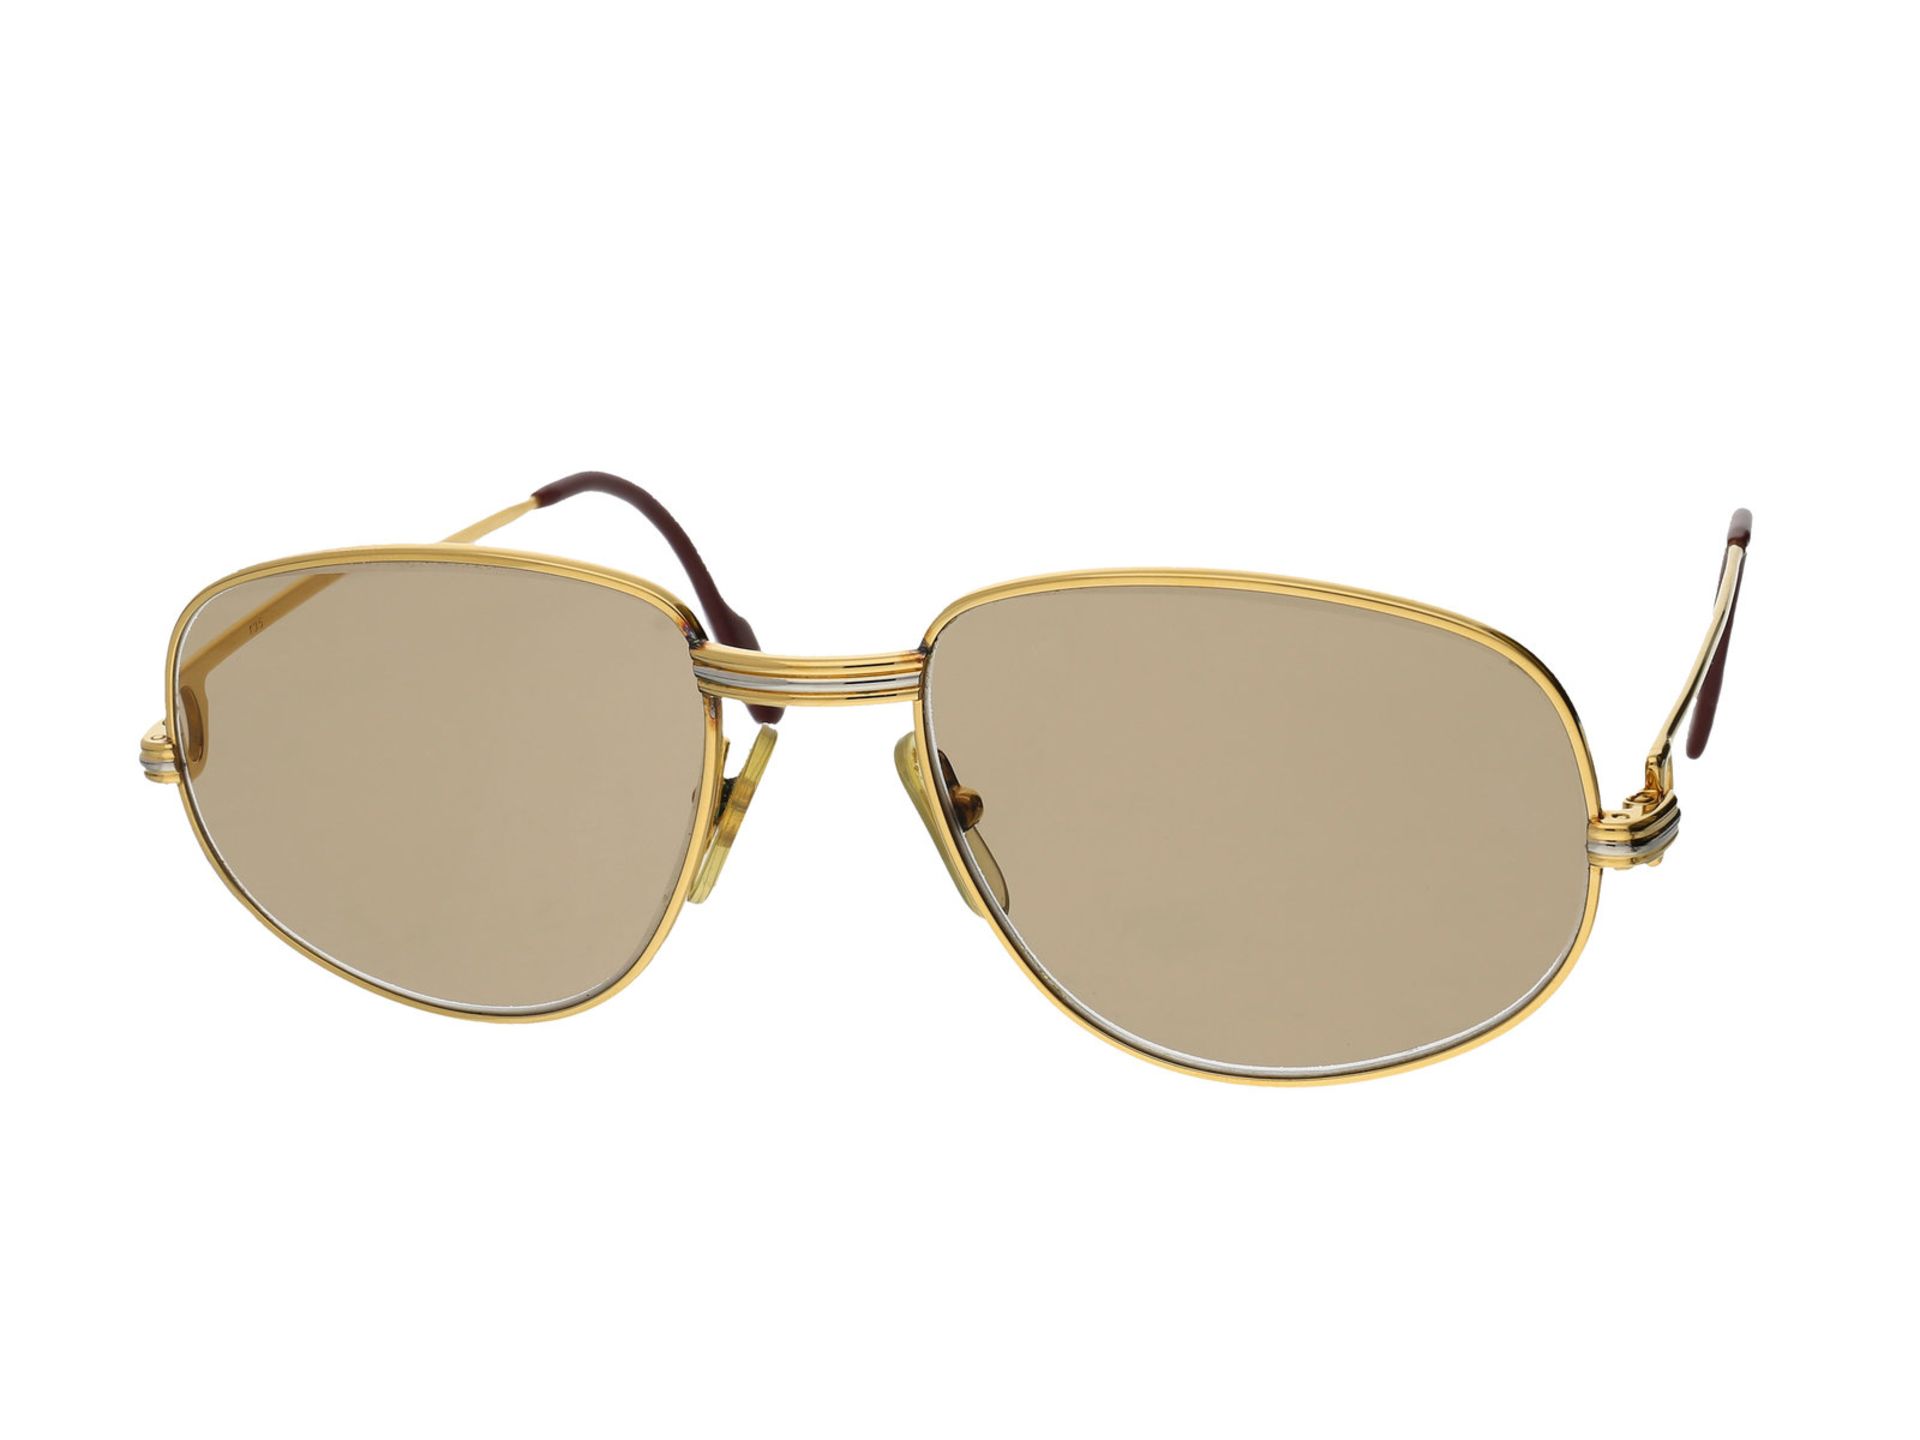 Brille: vintage Cartier Sonnenbrille "Modell 135"